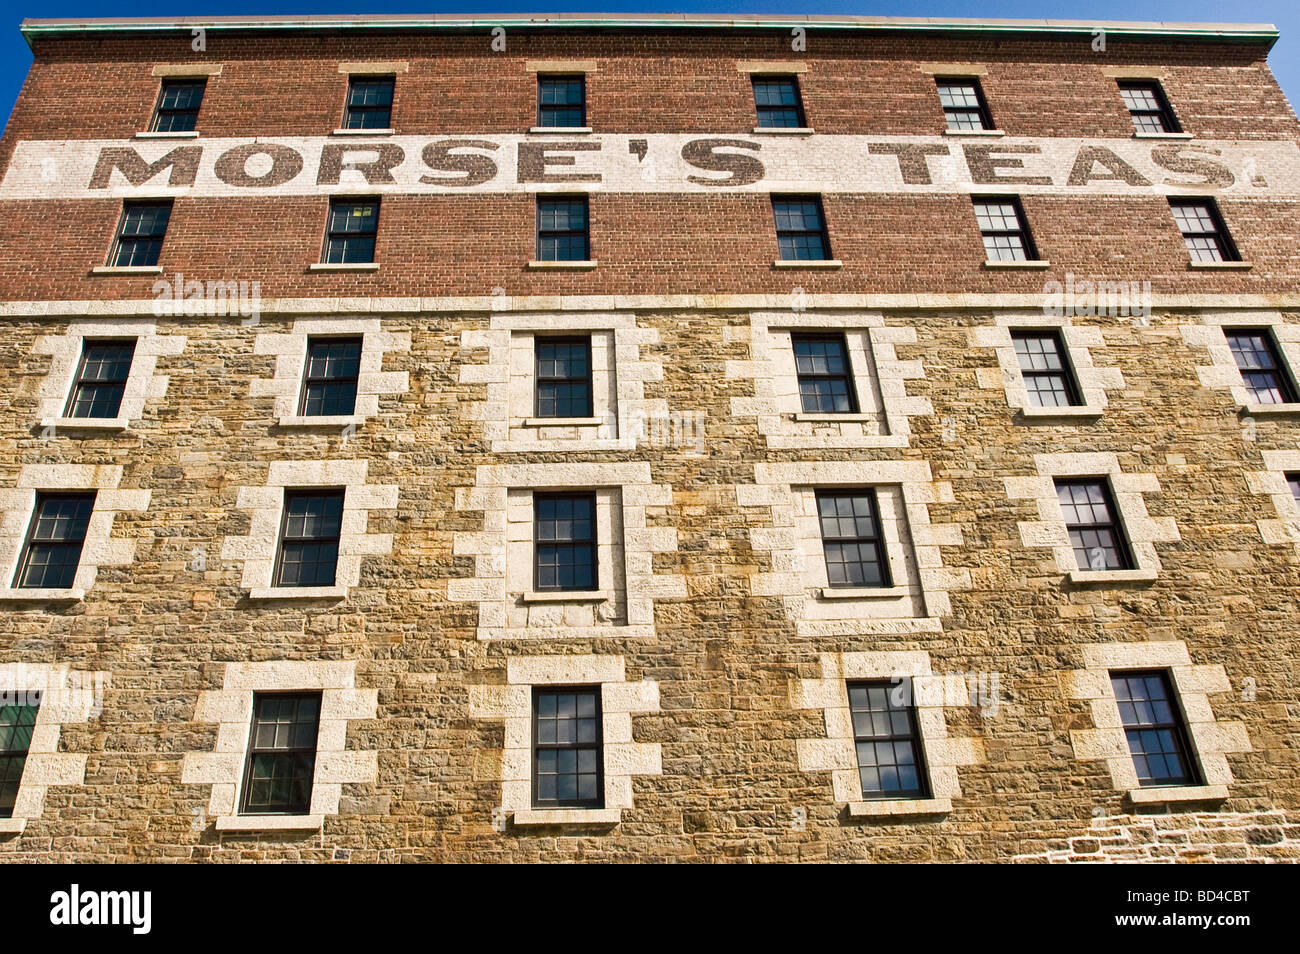 Morse's teas building in Historic Properties of Nova Scotia restoration architecture in Halifax, Nova Scotia, Canada Stock Photo